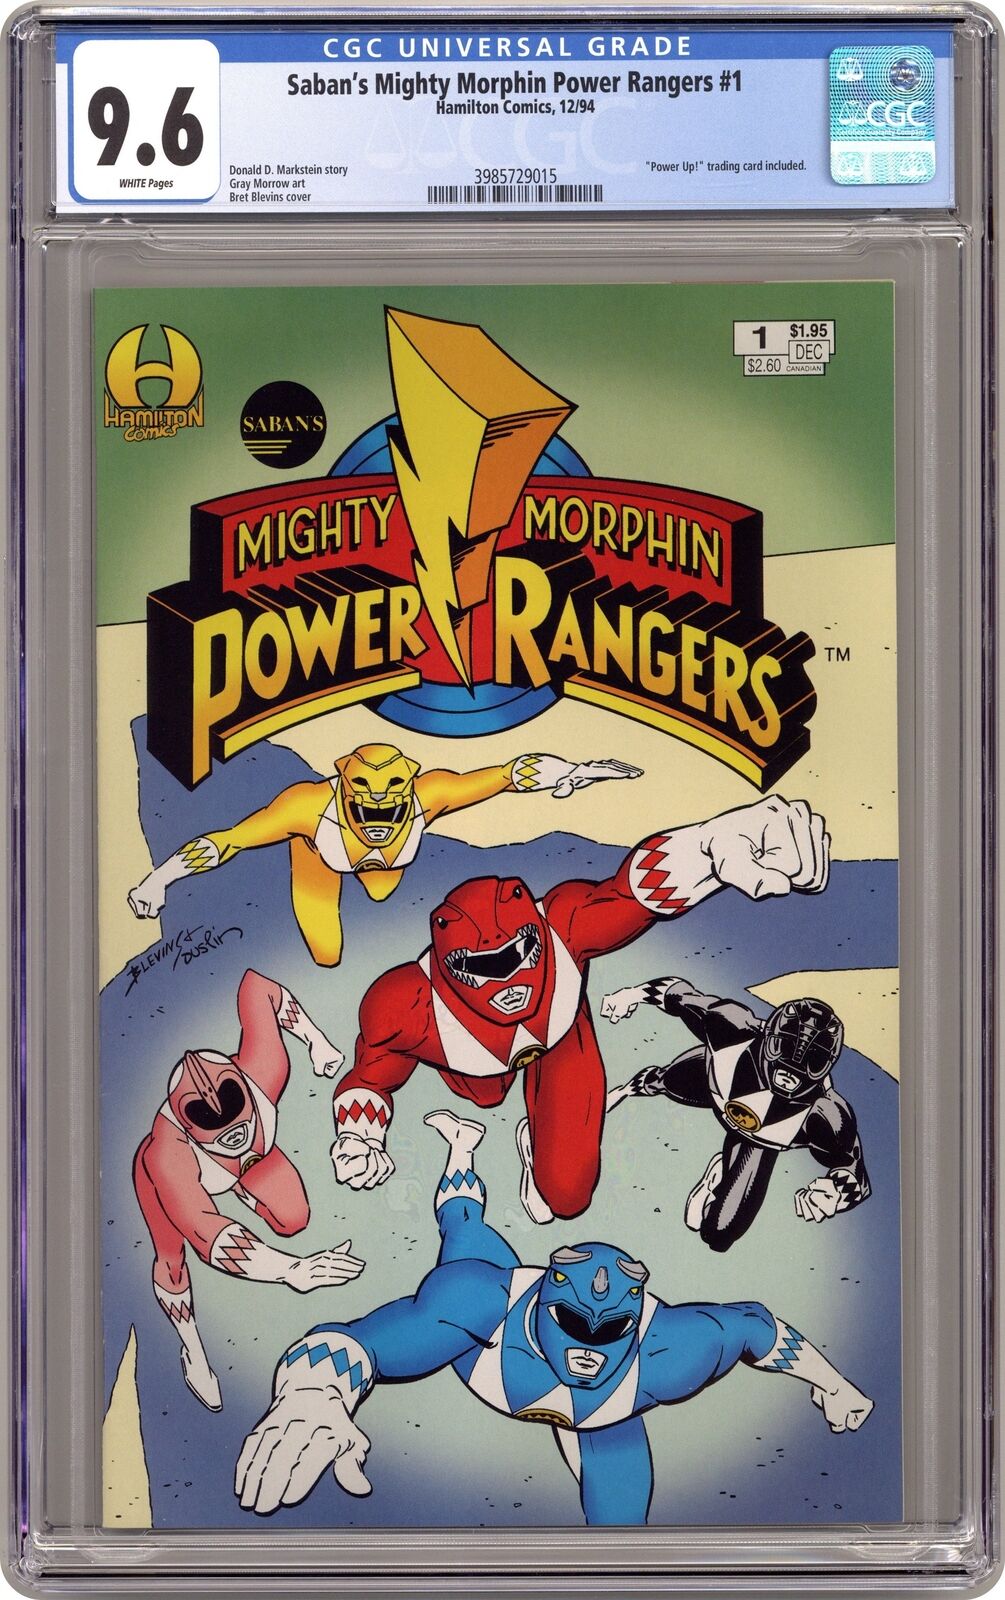 Mighty Morphin Power Rangers #1 CGC 9.6 1994 3985729015